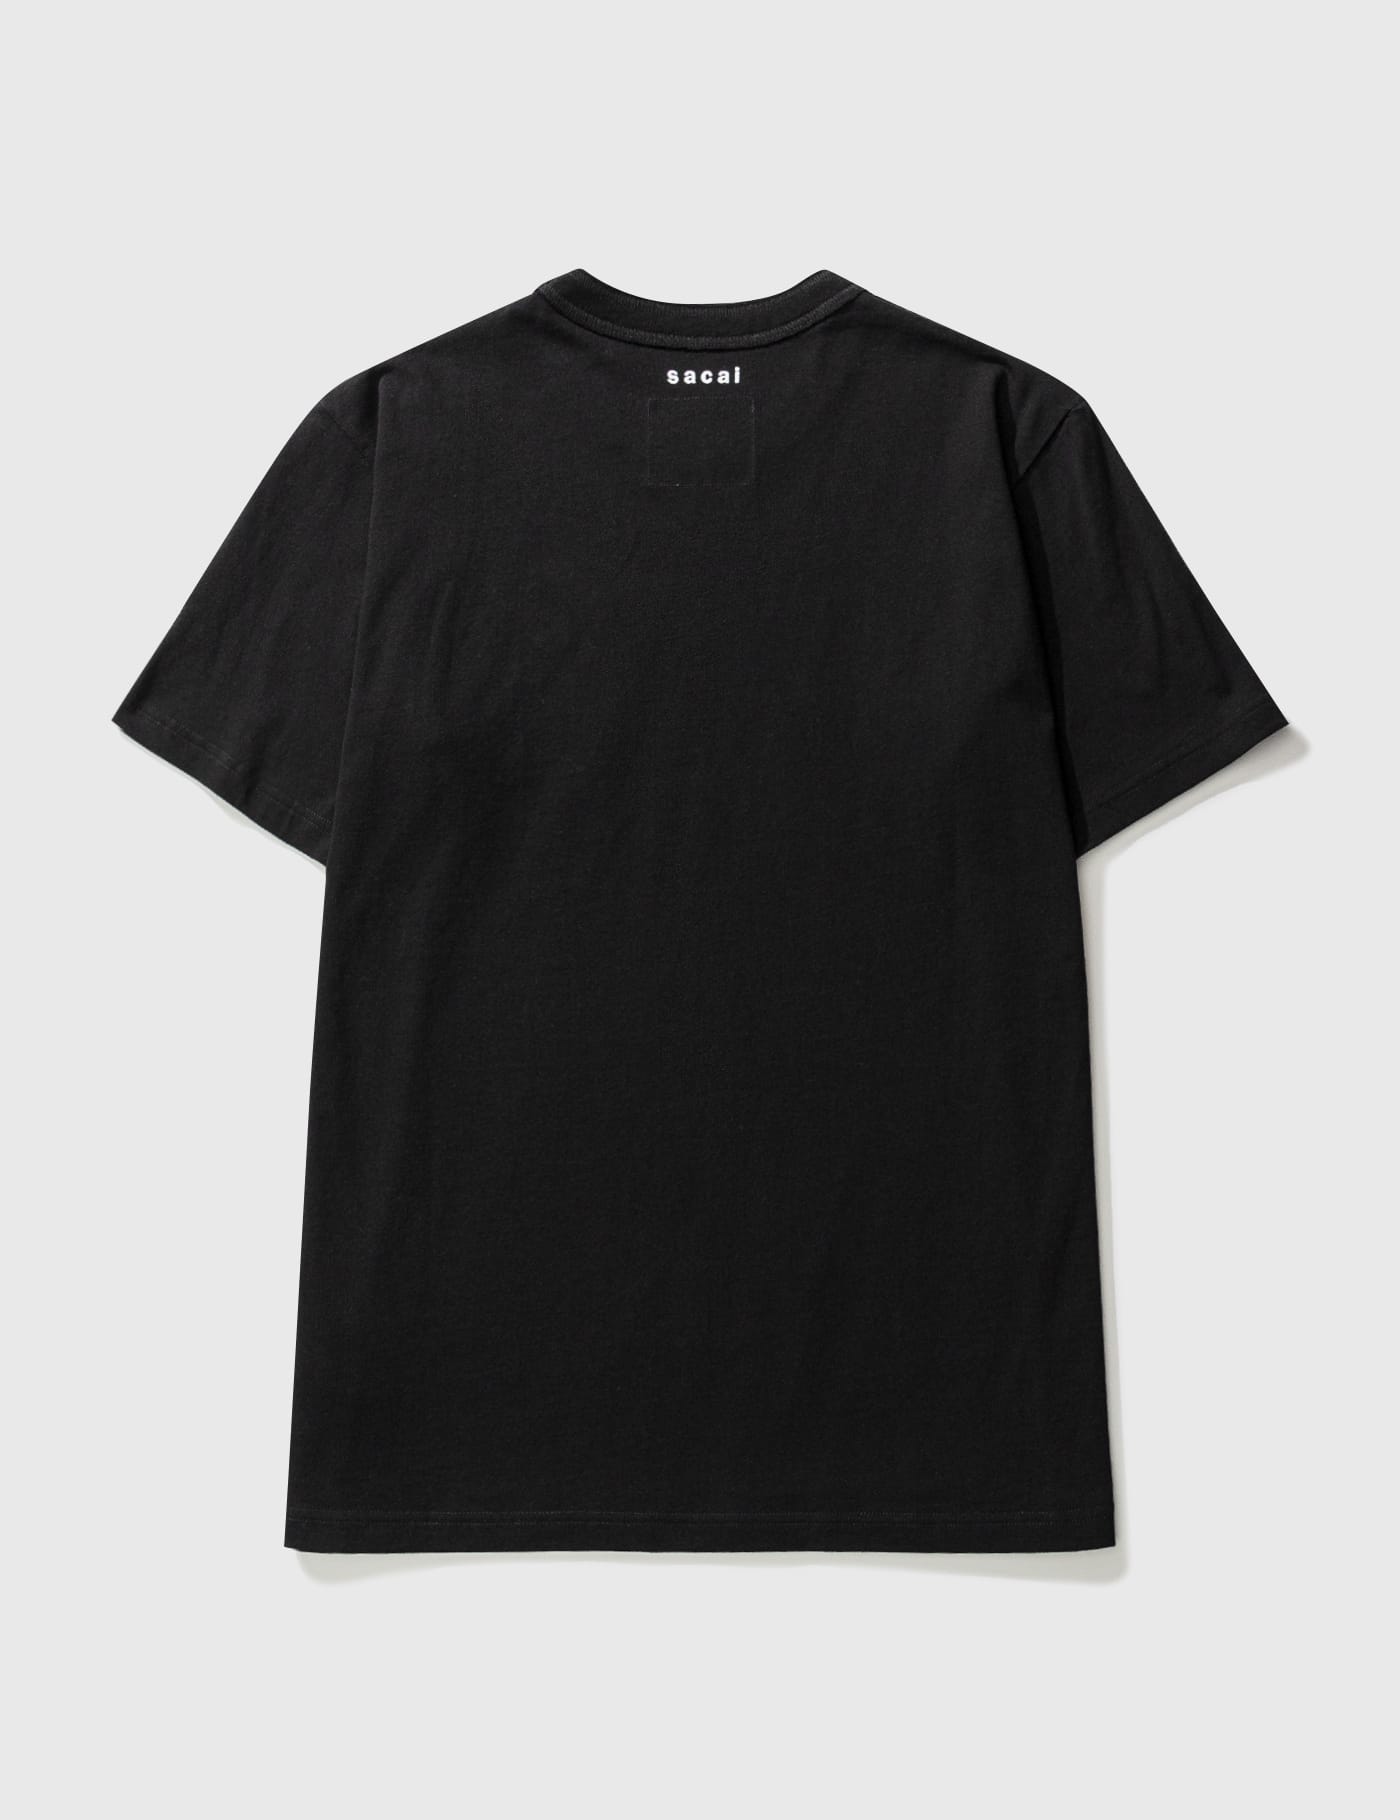 Sacai - KAWS Embroidery T-shirt | HBX - Globally Curated Fashion